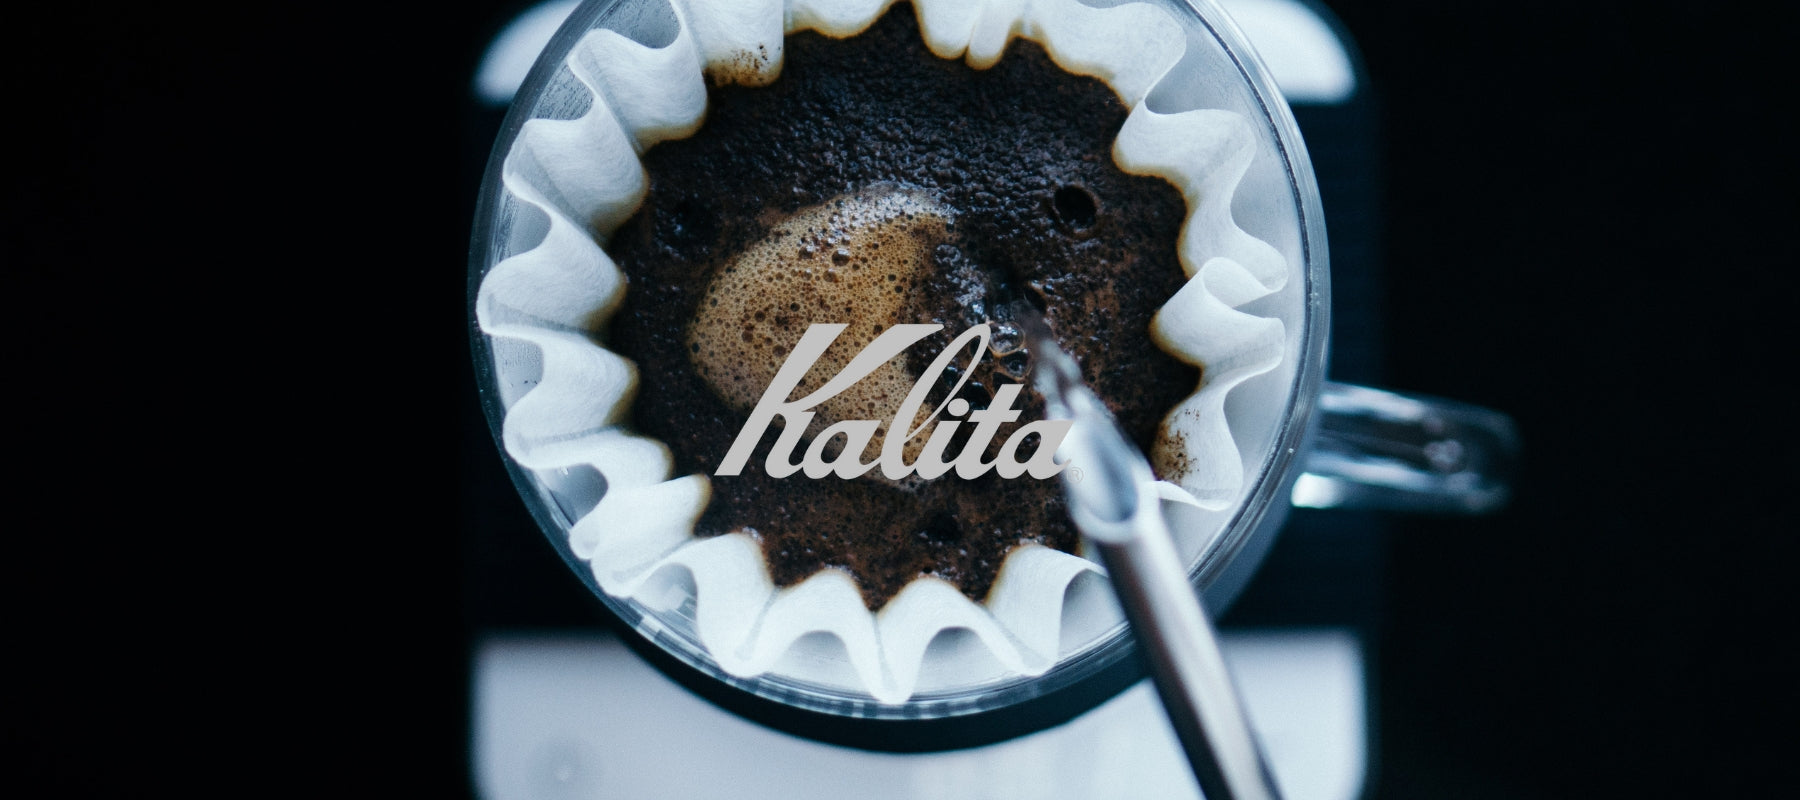 Kalita Coffee Brewing Equipment